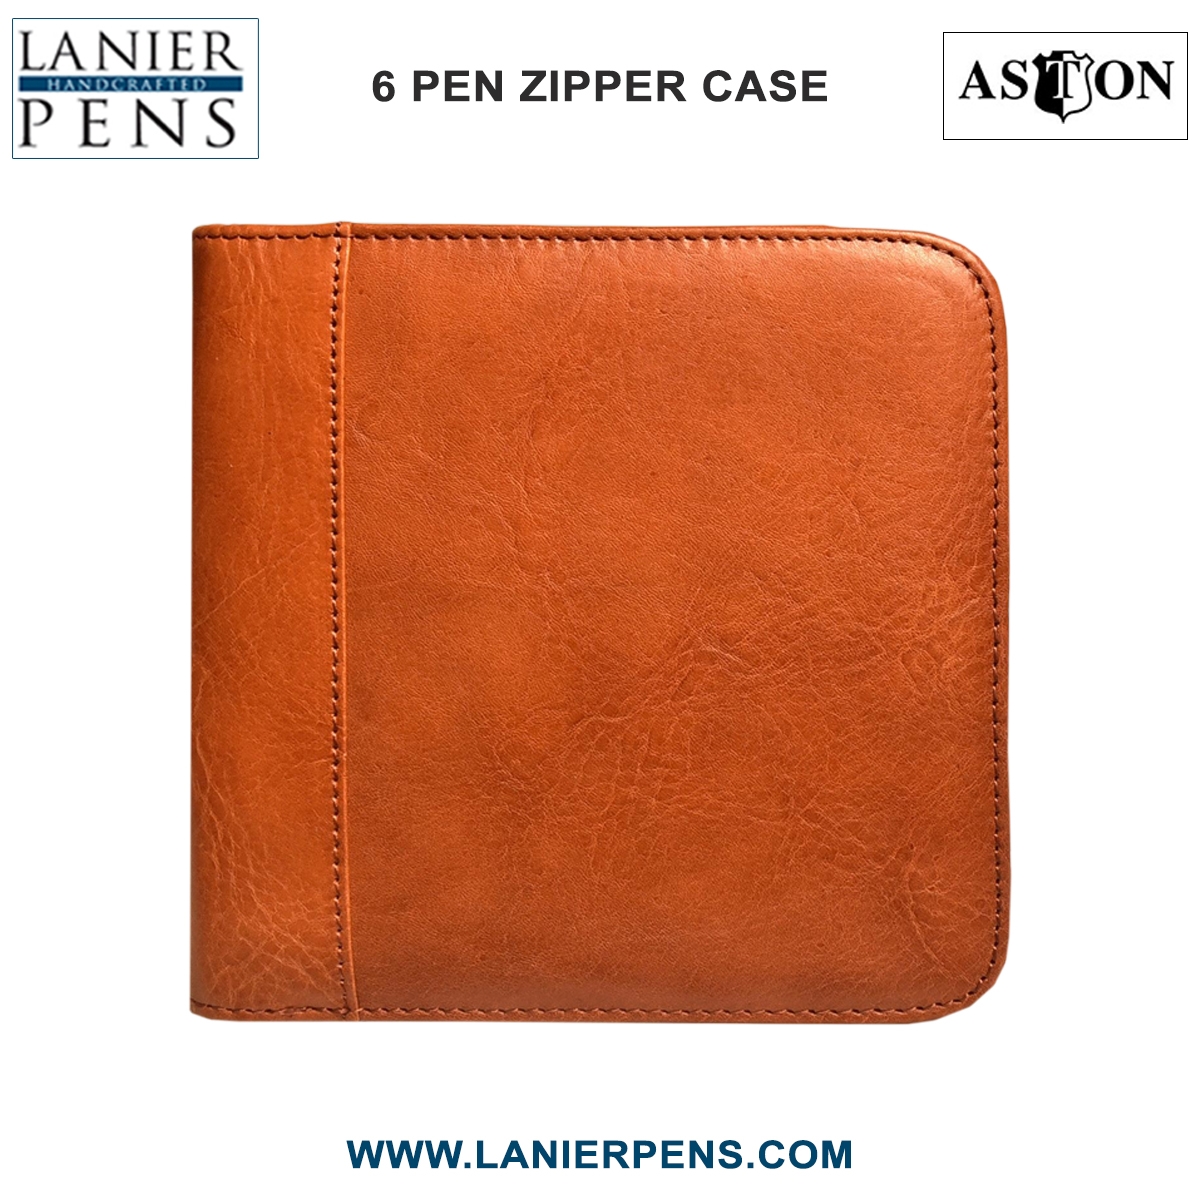 Aston Leather Collectors Zippered 6 Pen Case (Tan) - Lanier Pens